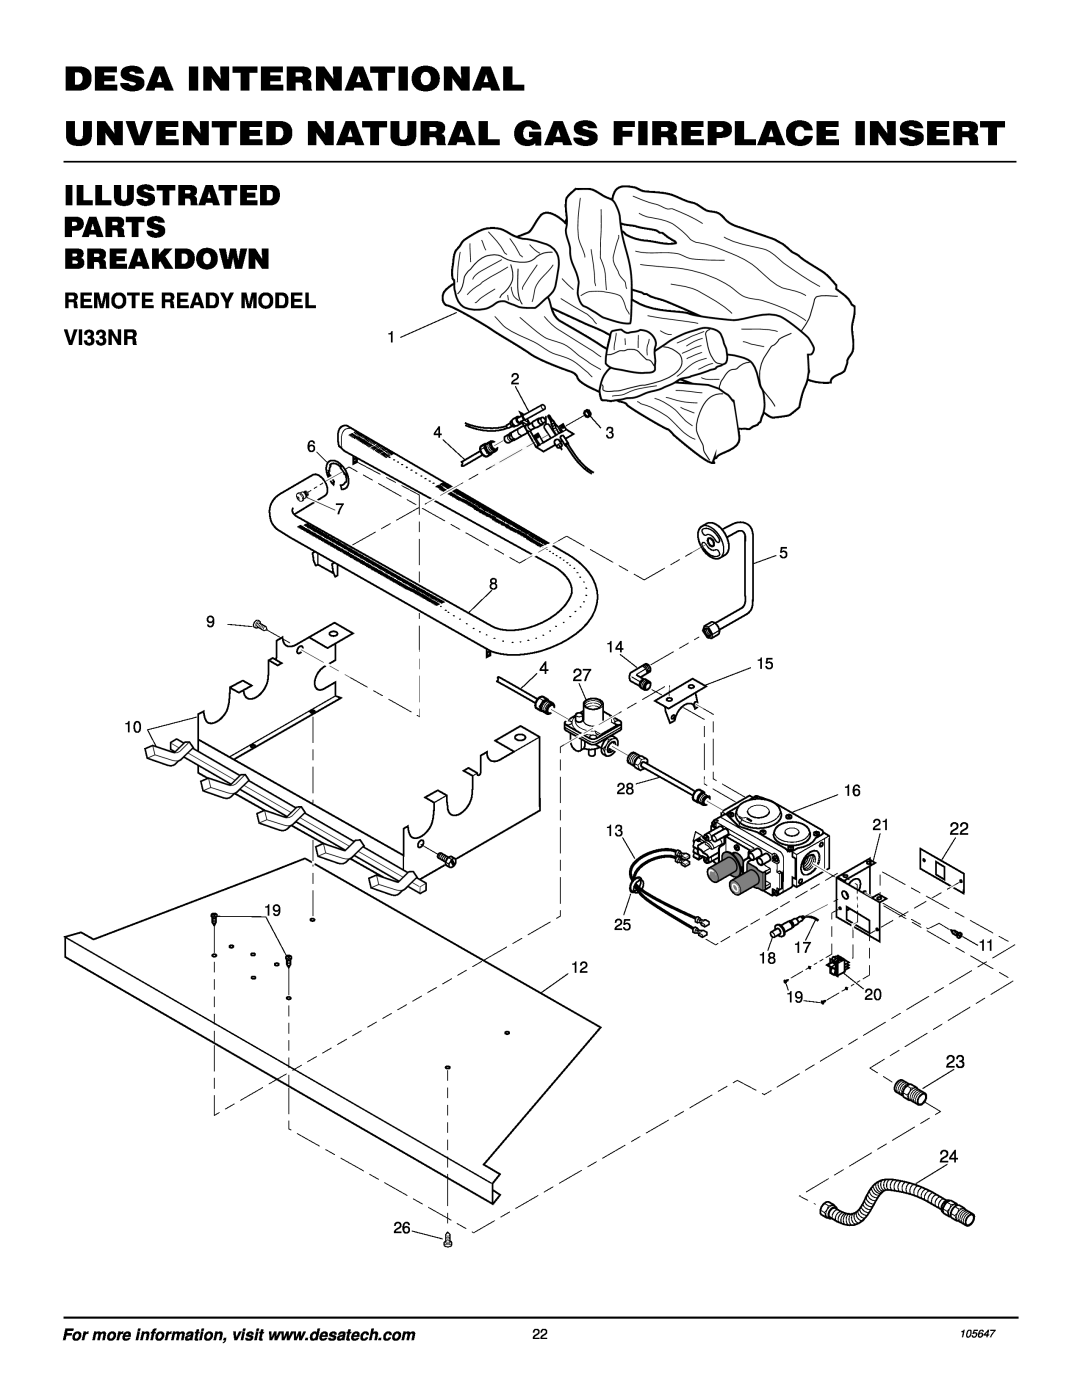 Desa VI33NR Illustrated Parts Breakdown, Desa International, Unvented Natural Gas Fireplace Insert, 105647, I H Lo 